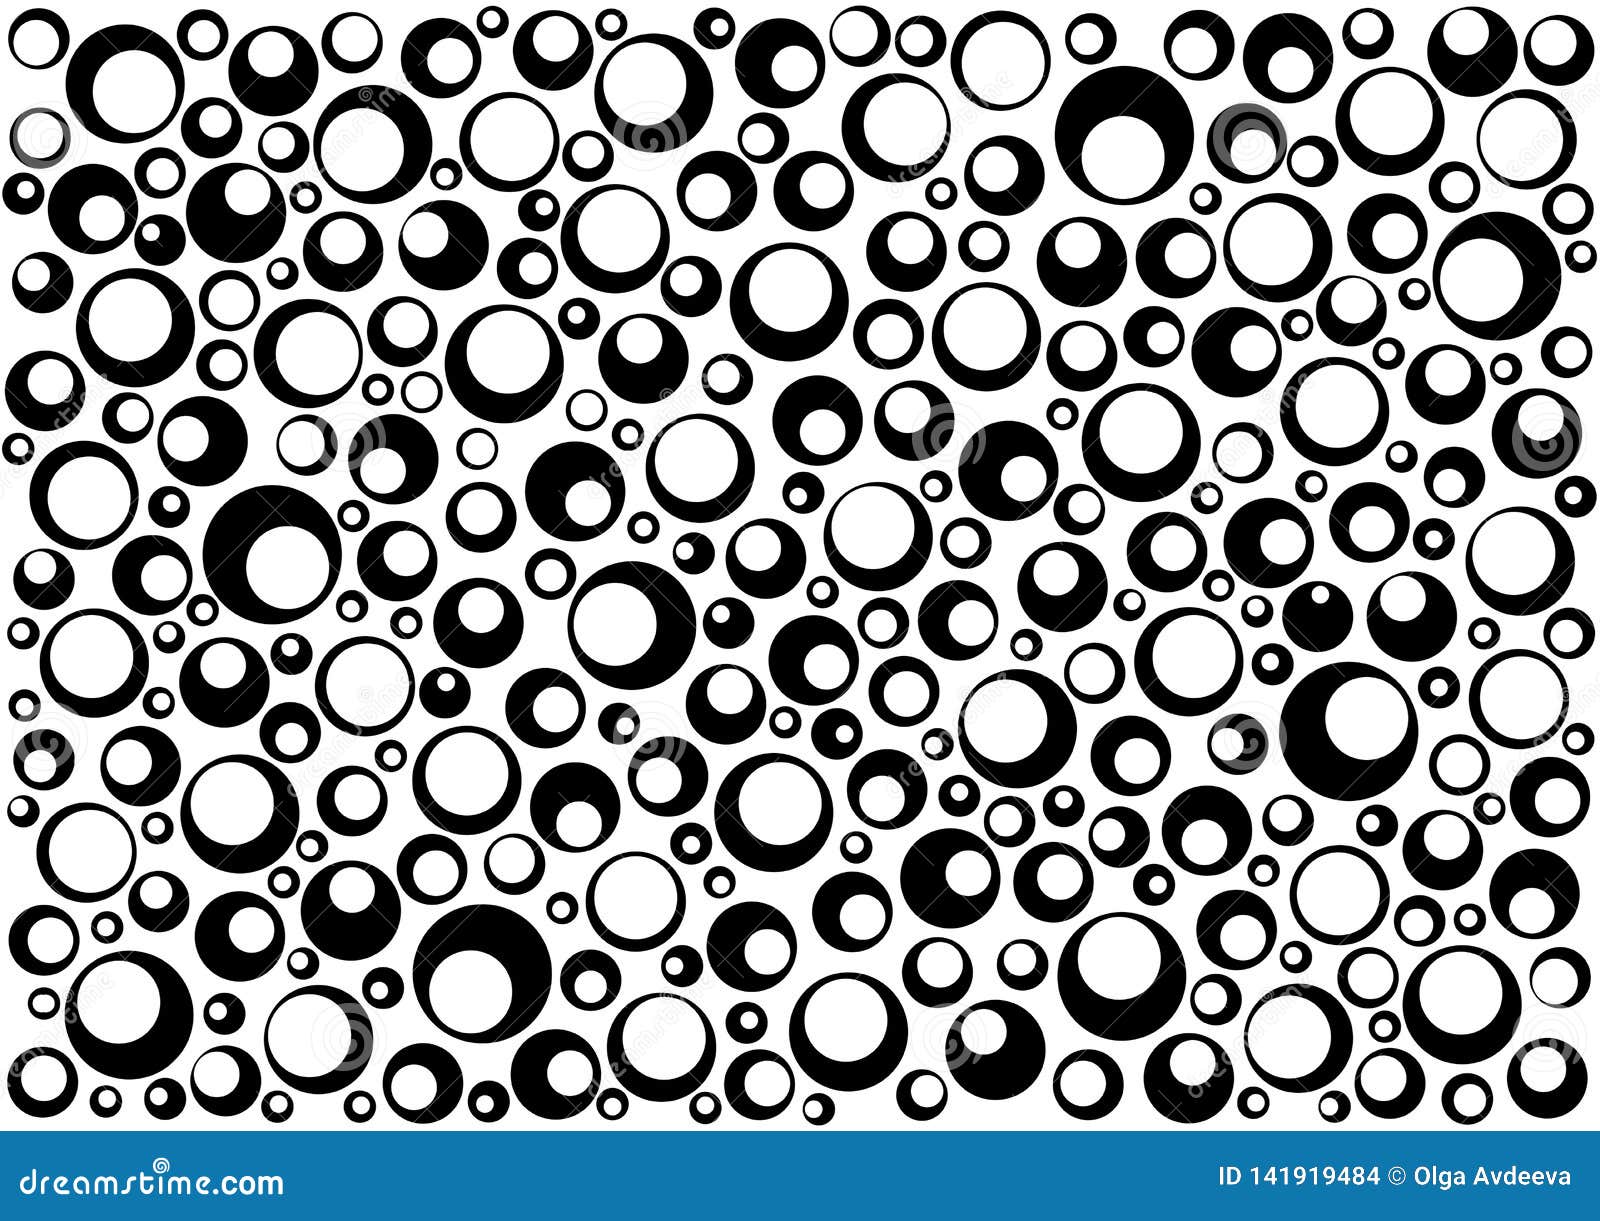 Bubbles Black White Circles, Background Balls, Pimples Stock ...